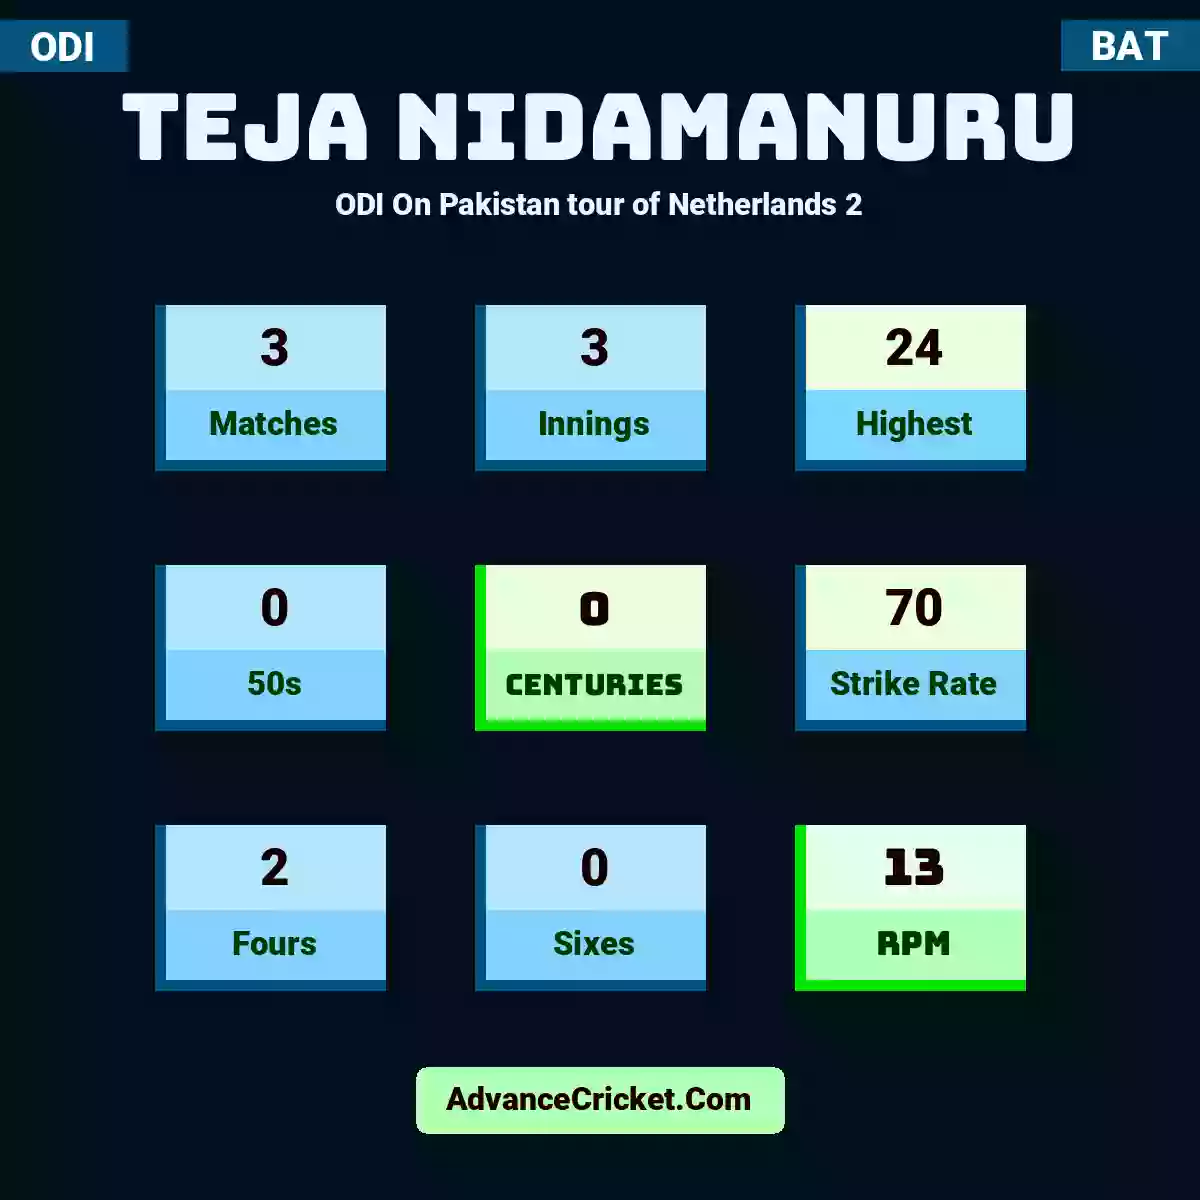 Teja Nidamanuru ODI  On Pakistan tour of Netherlands 2, Teja Nidamanuru played 3 matches, scored 24 runs as highest, 0 half-centuries, and 0 centuries, with a strike rate of 70. T.Nidamanuru hit 2 fours and 0 sixes, with an RPM of 13.